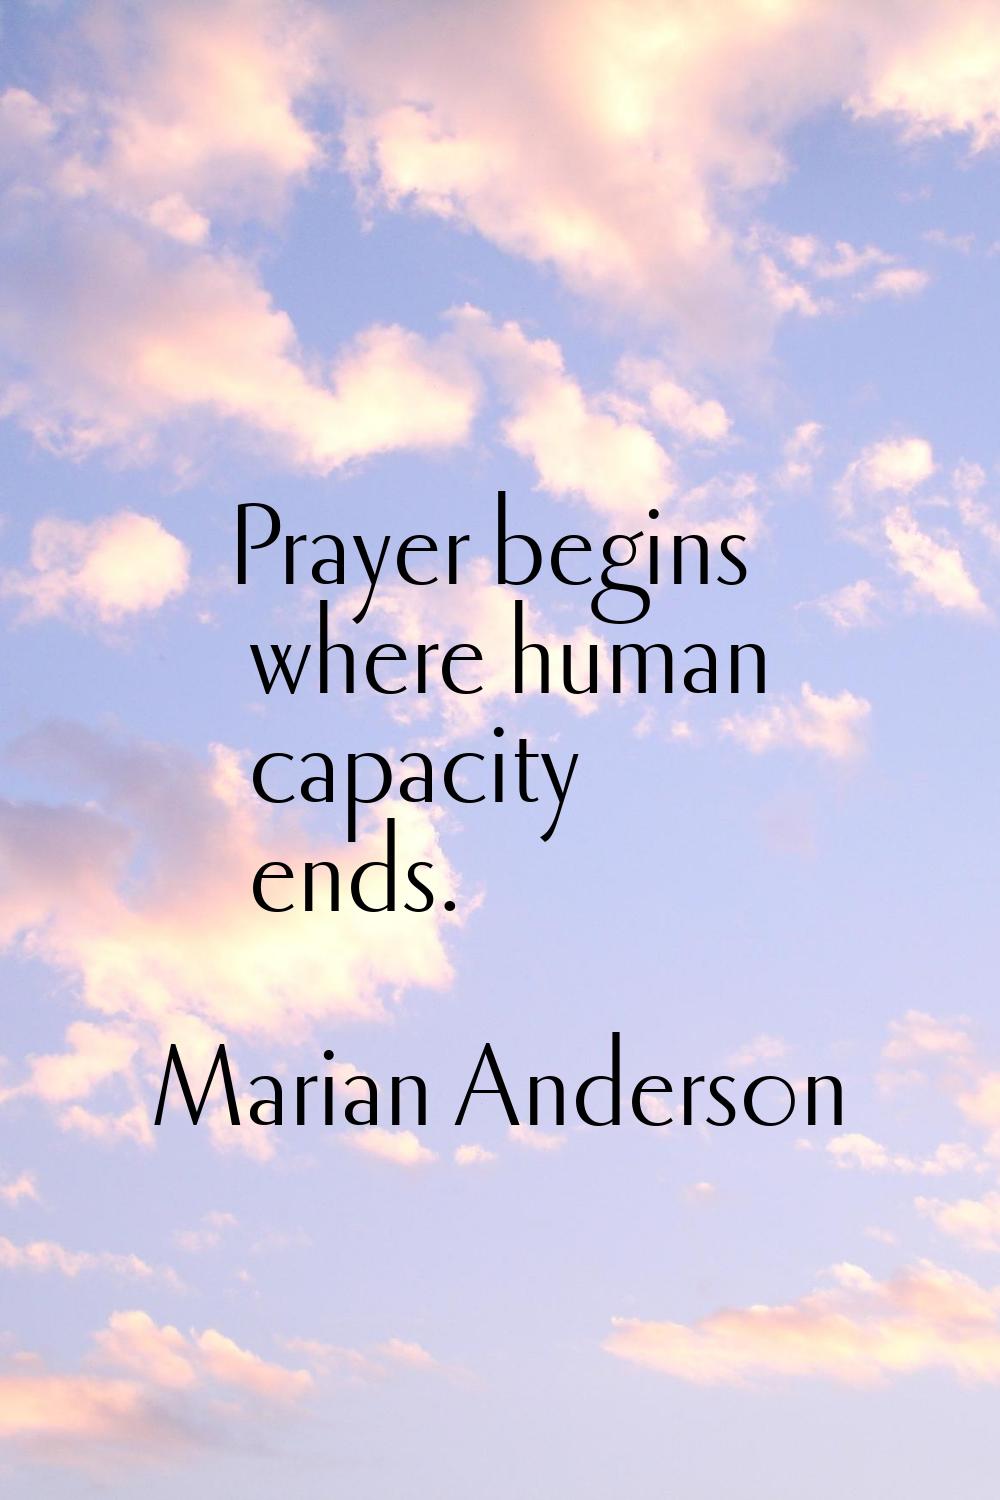 Prayer begins where human capacity ends.